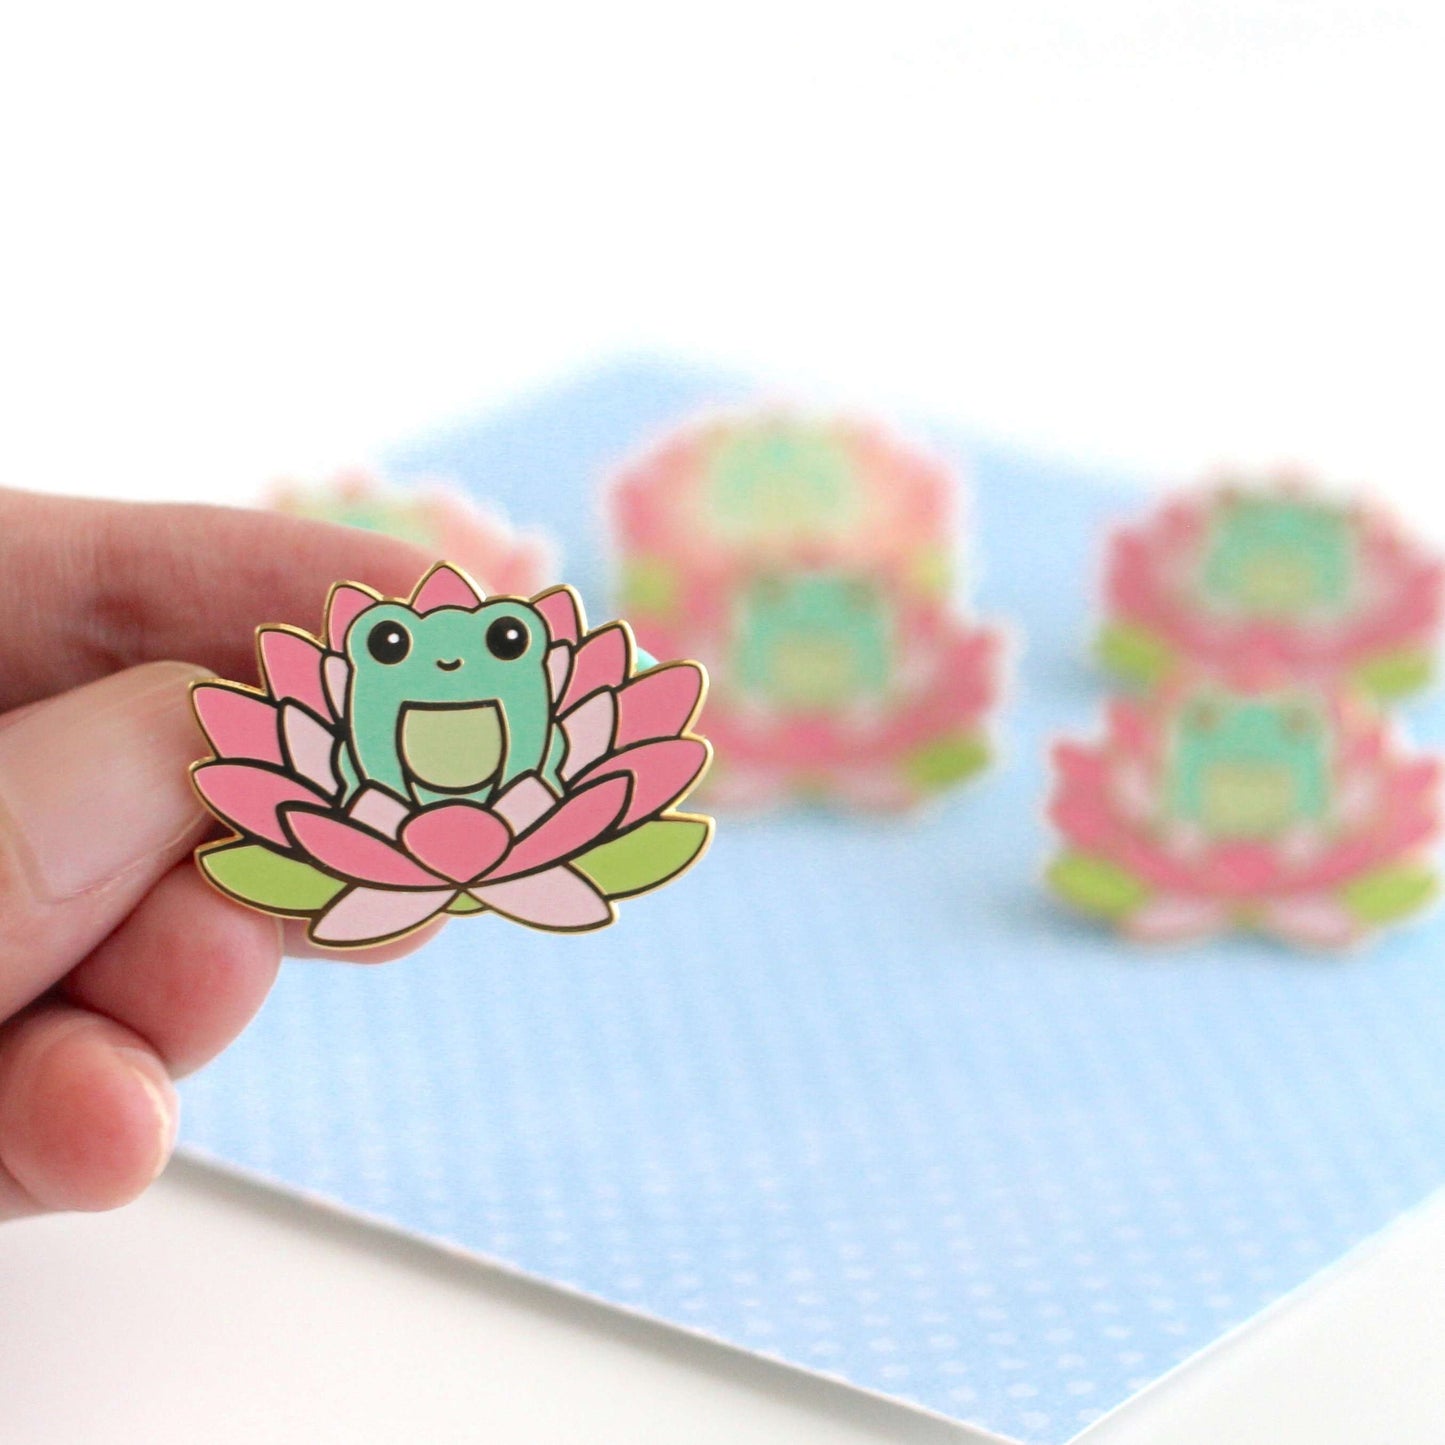 Pink Lotus Flower Frog Pin - Hard Enamel Pin - Cute Frog Gift by Wild Whimsy Woolies